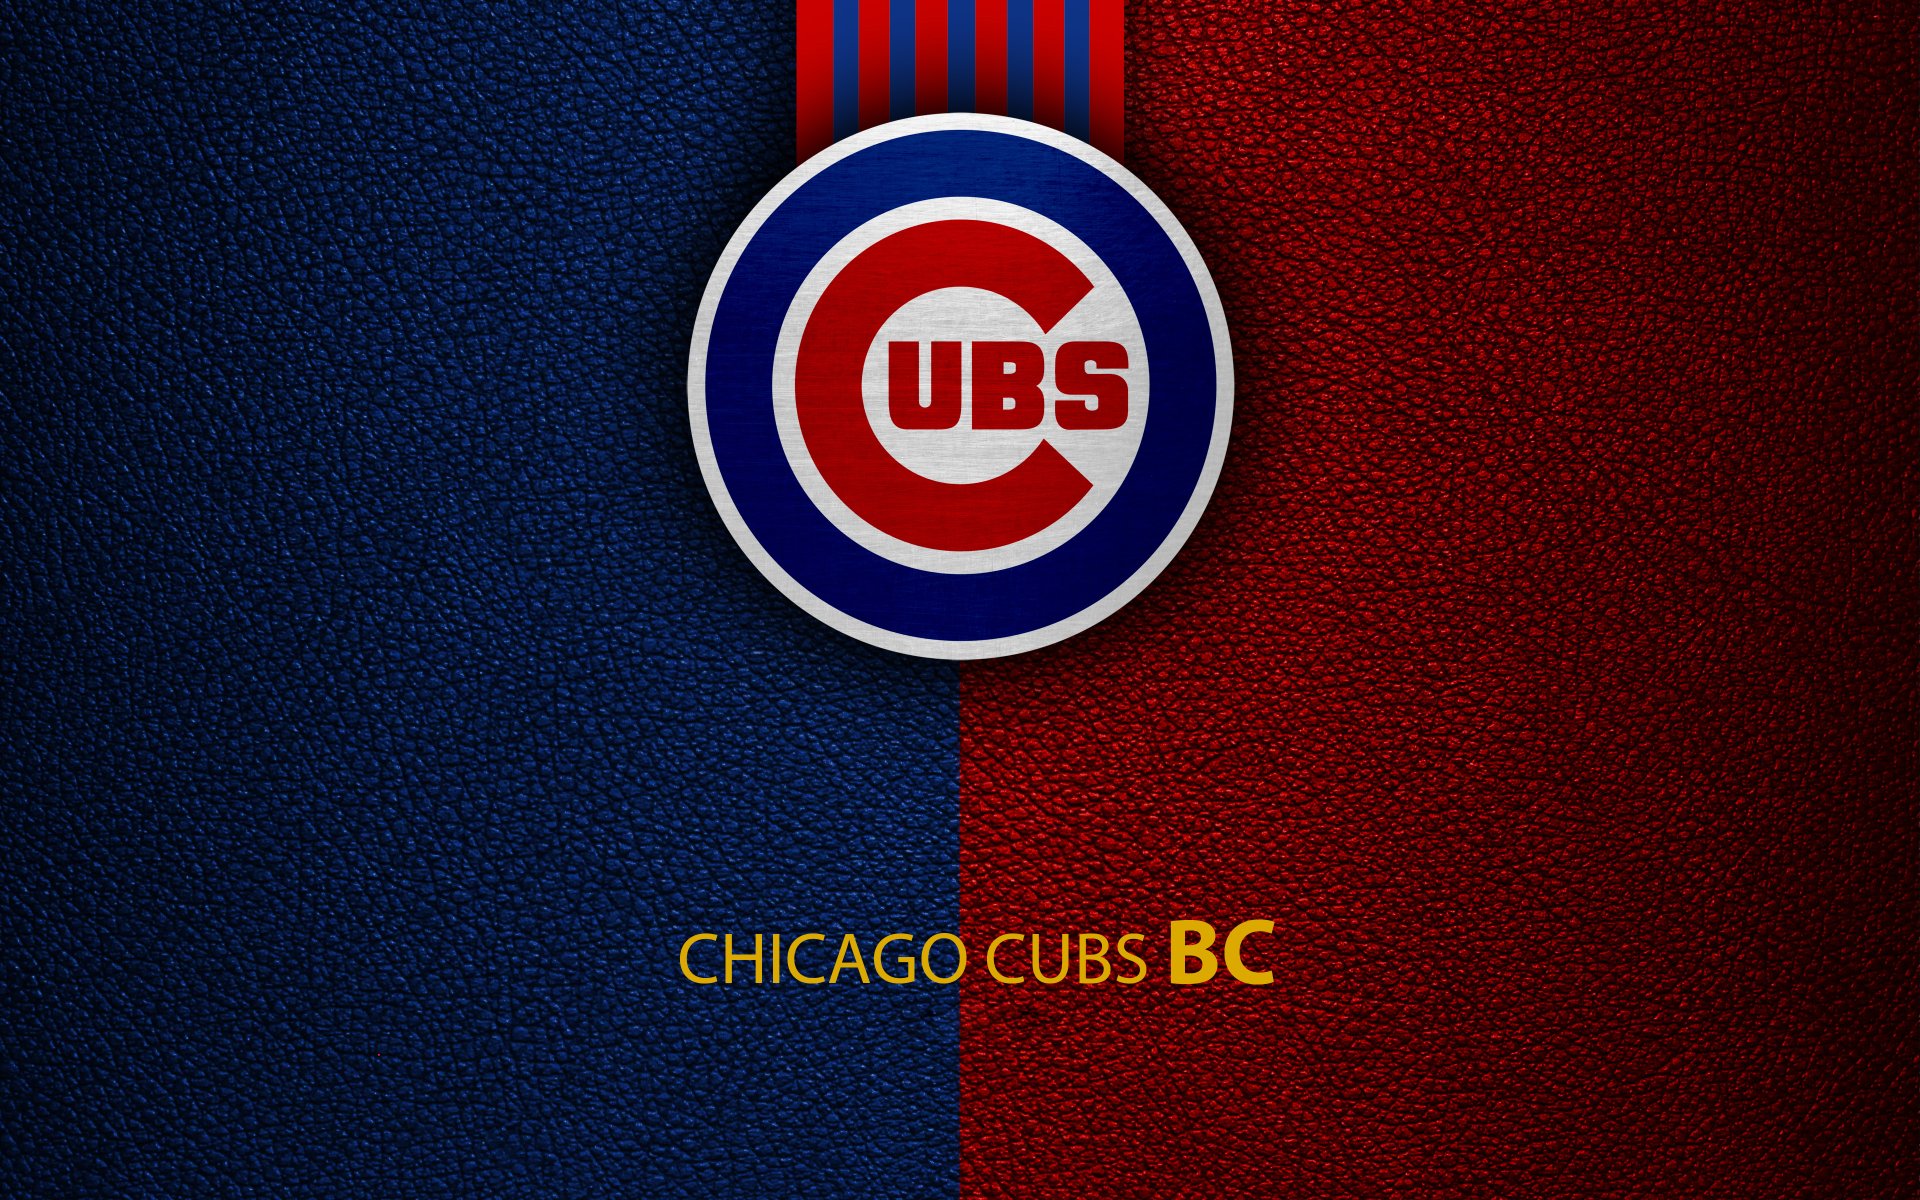 Chicago cubs 1080P, 2K, 4K, 5K HD wallpapers free download